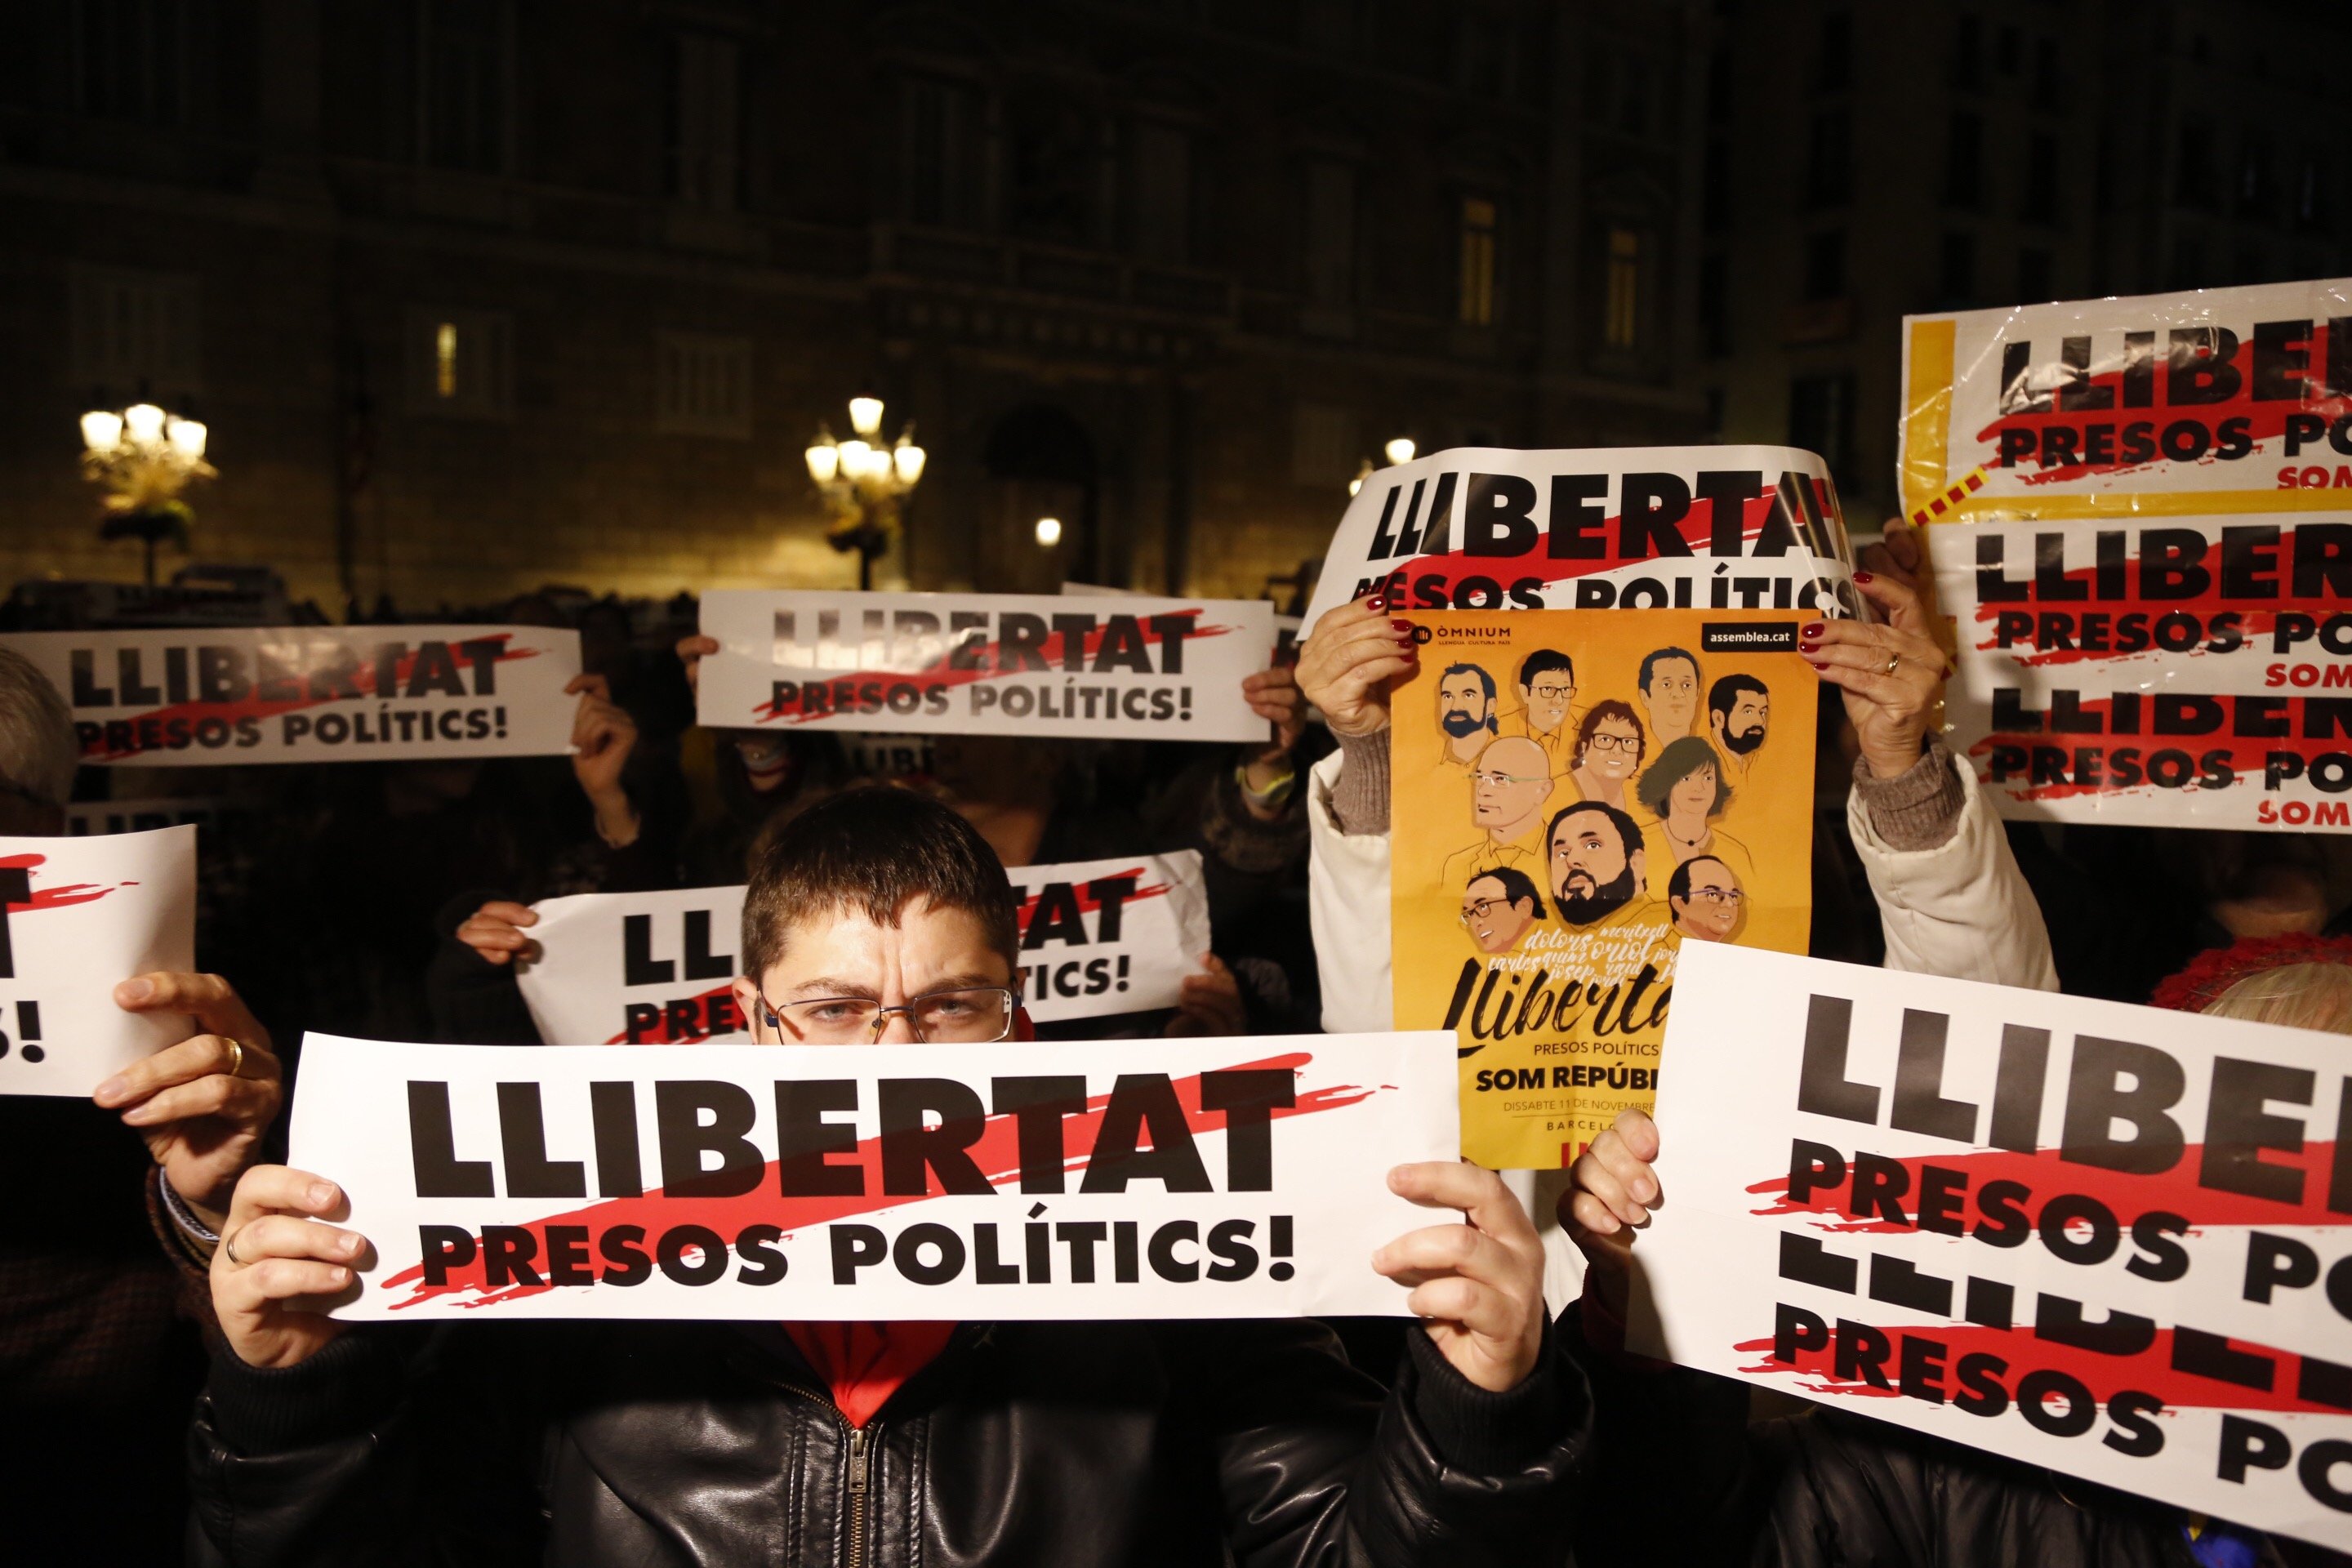 BBC: "Catalunya posiblemente se independizará, pero a largo plazo"